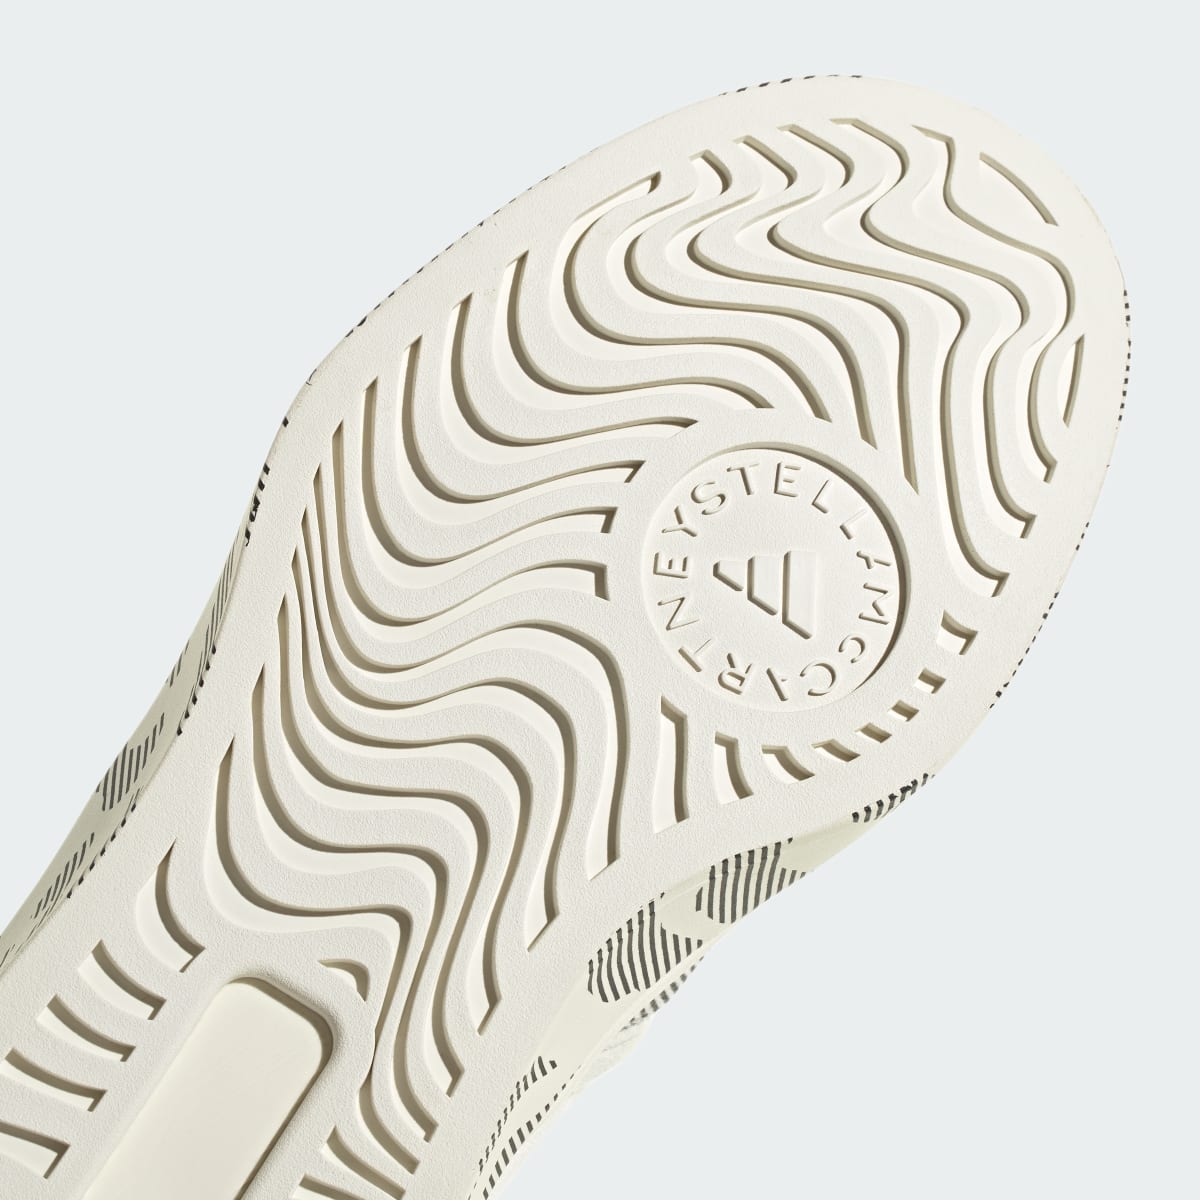 Adidas Chaussure slip-on adidas by Stella McCartney Court. 9